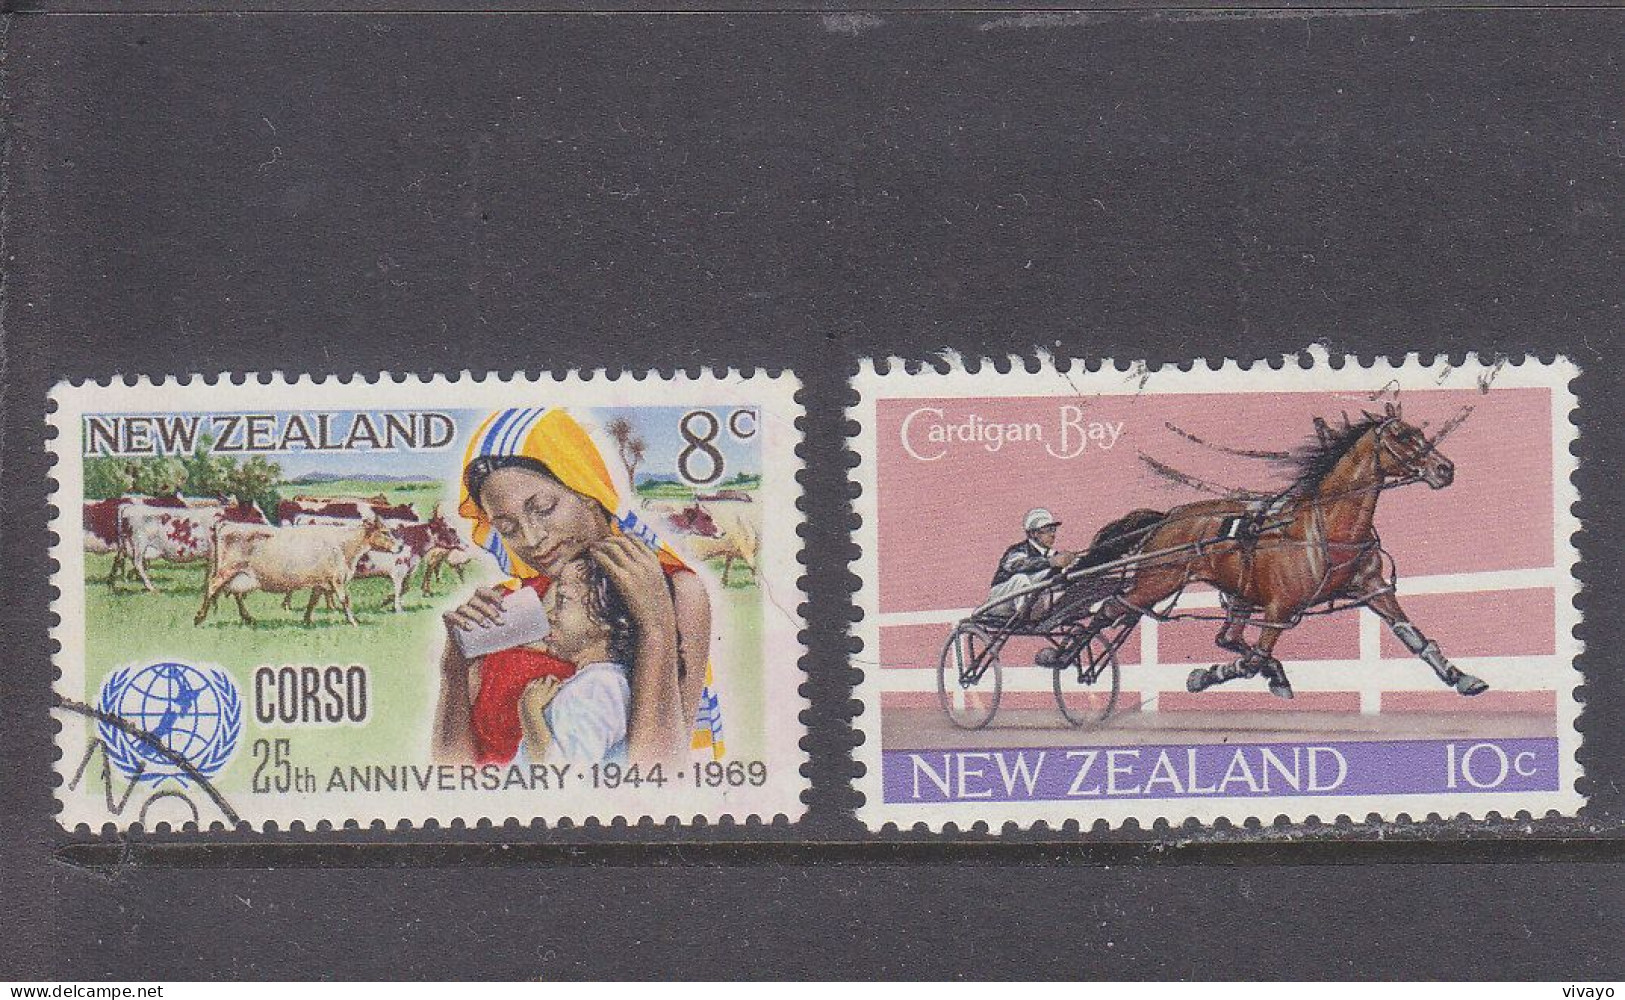 NEW ZEALAND - O / FINE CANCELLED - 1969/1970 - CORSO , CARDIGAN BAY , RACING - Yv. 498, 500 - Mi. 515, 516 - Usati